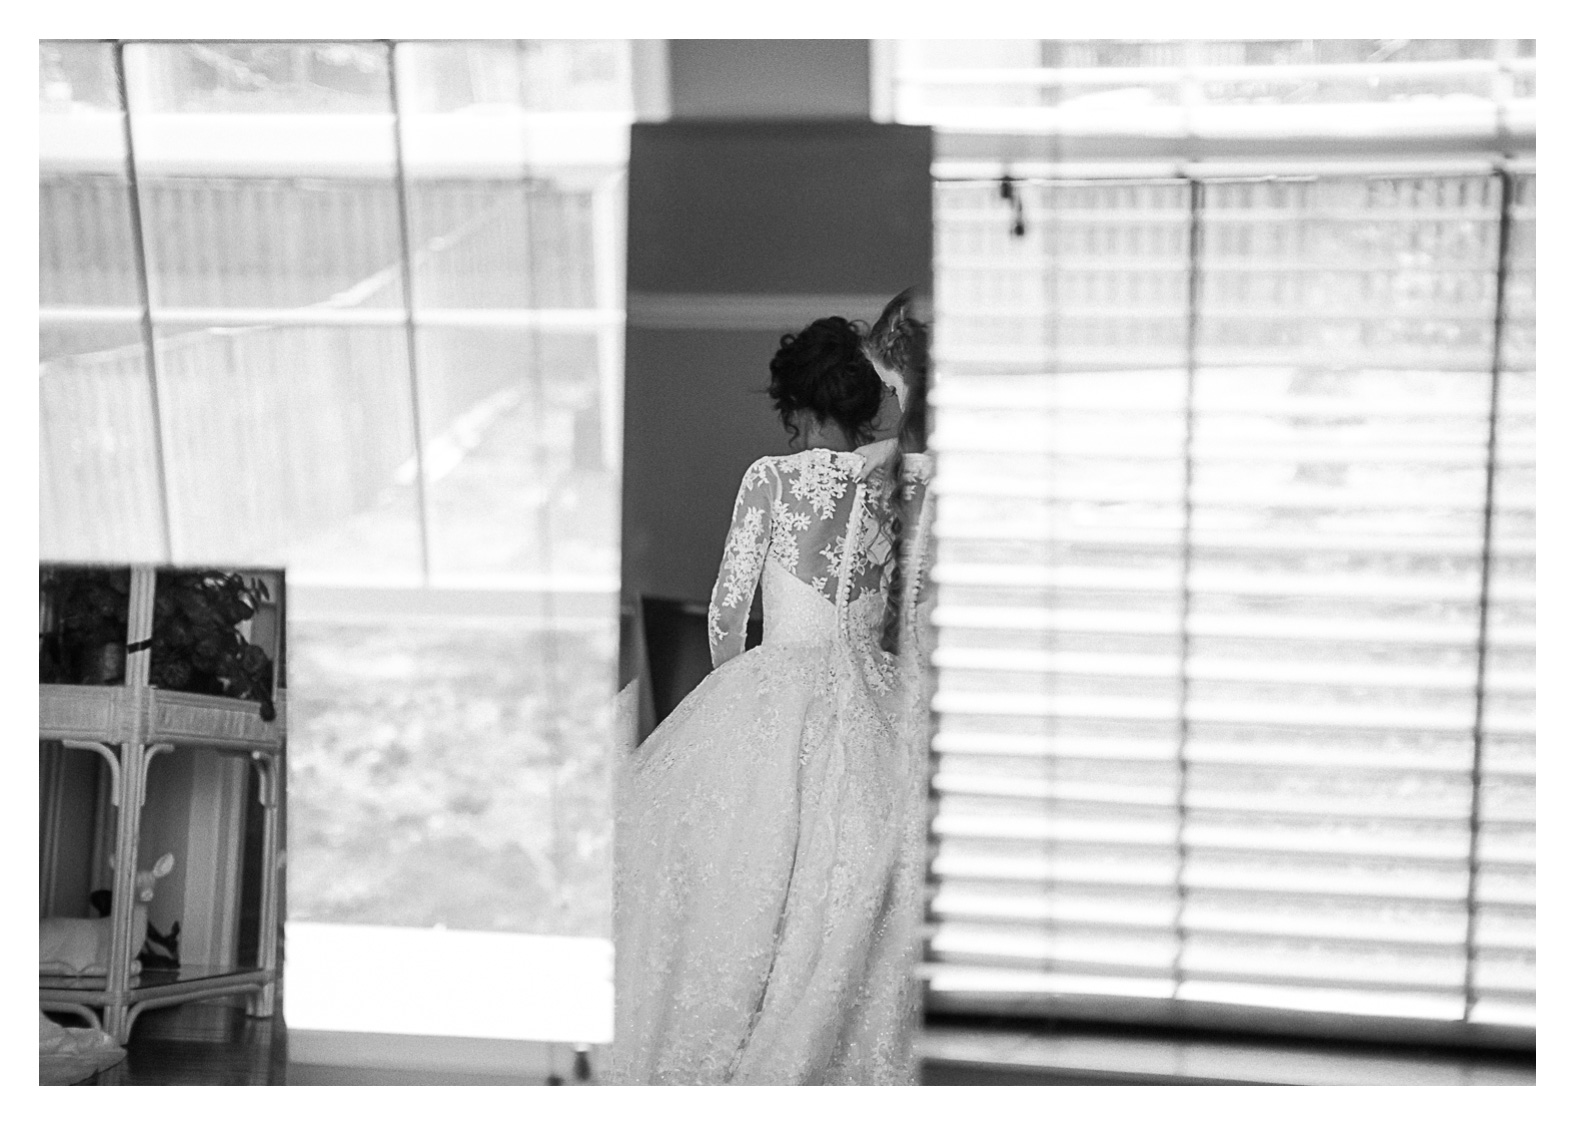 bride-prep-mother-buttoning-wedding-dress-black-and-white-manassas-virginia-wedding-mirror-reflection.jpg